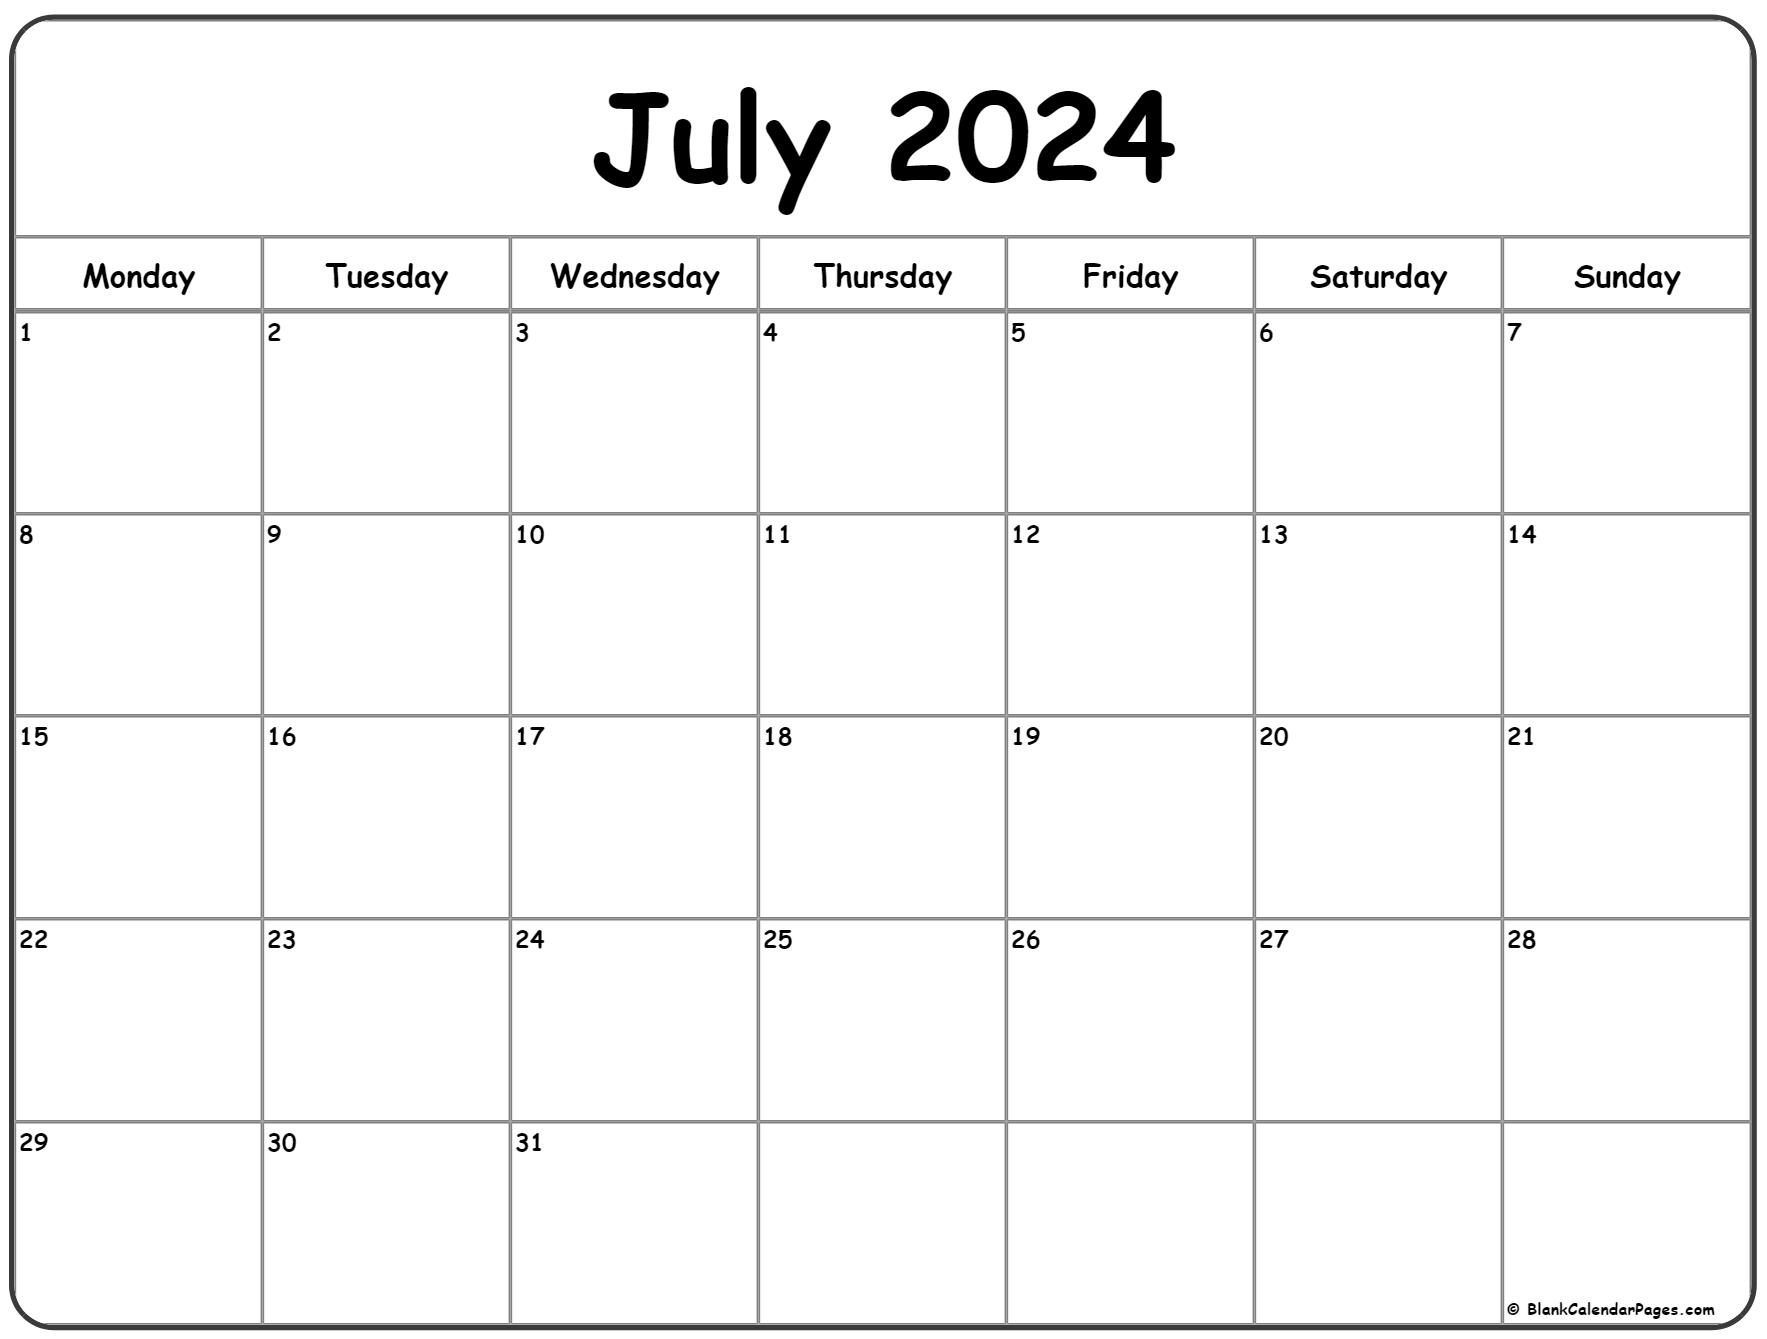 July 2024 Monday Calendar | Monday To Sunday for July 2024 Daily Calendar